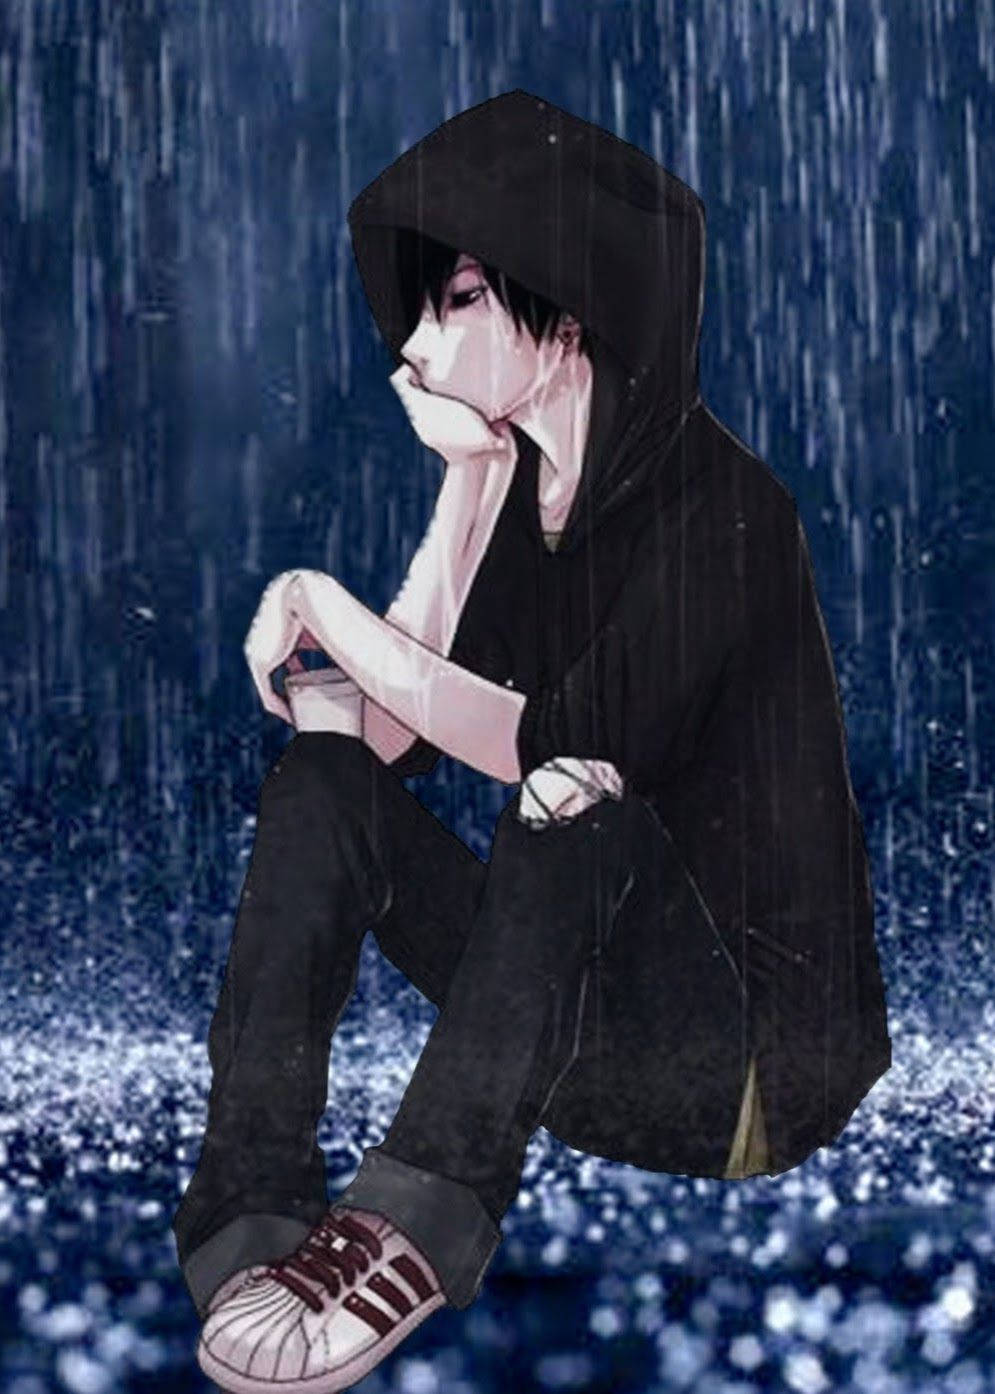 Captivating Sad Anime Girl Profile Picture Wallpaper